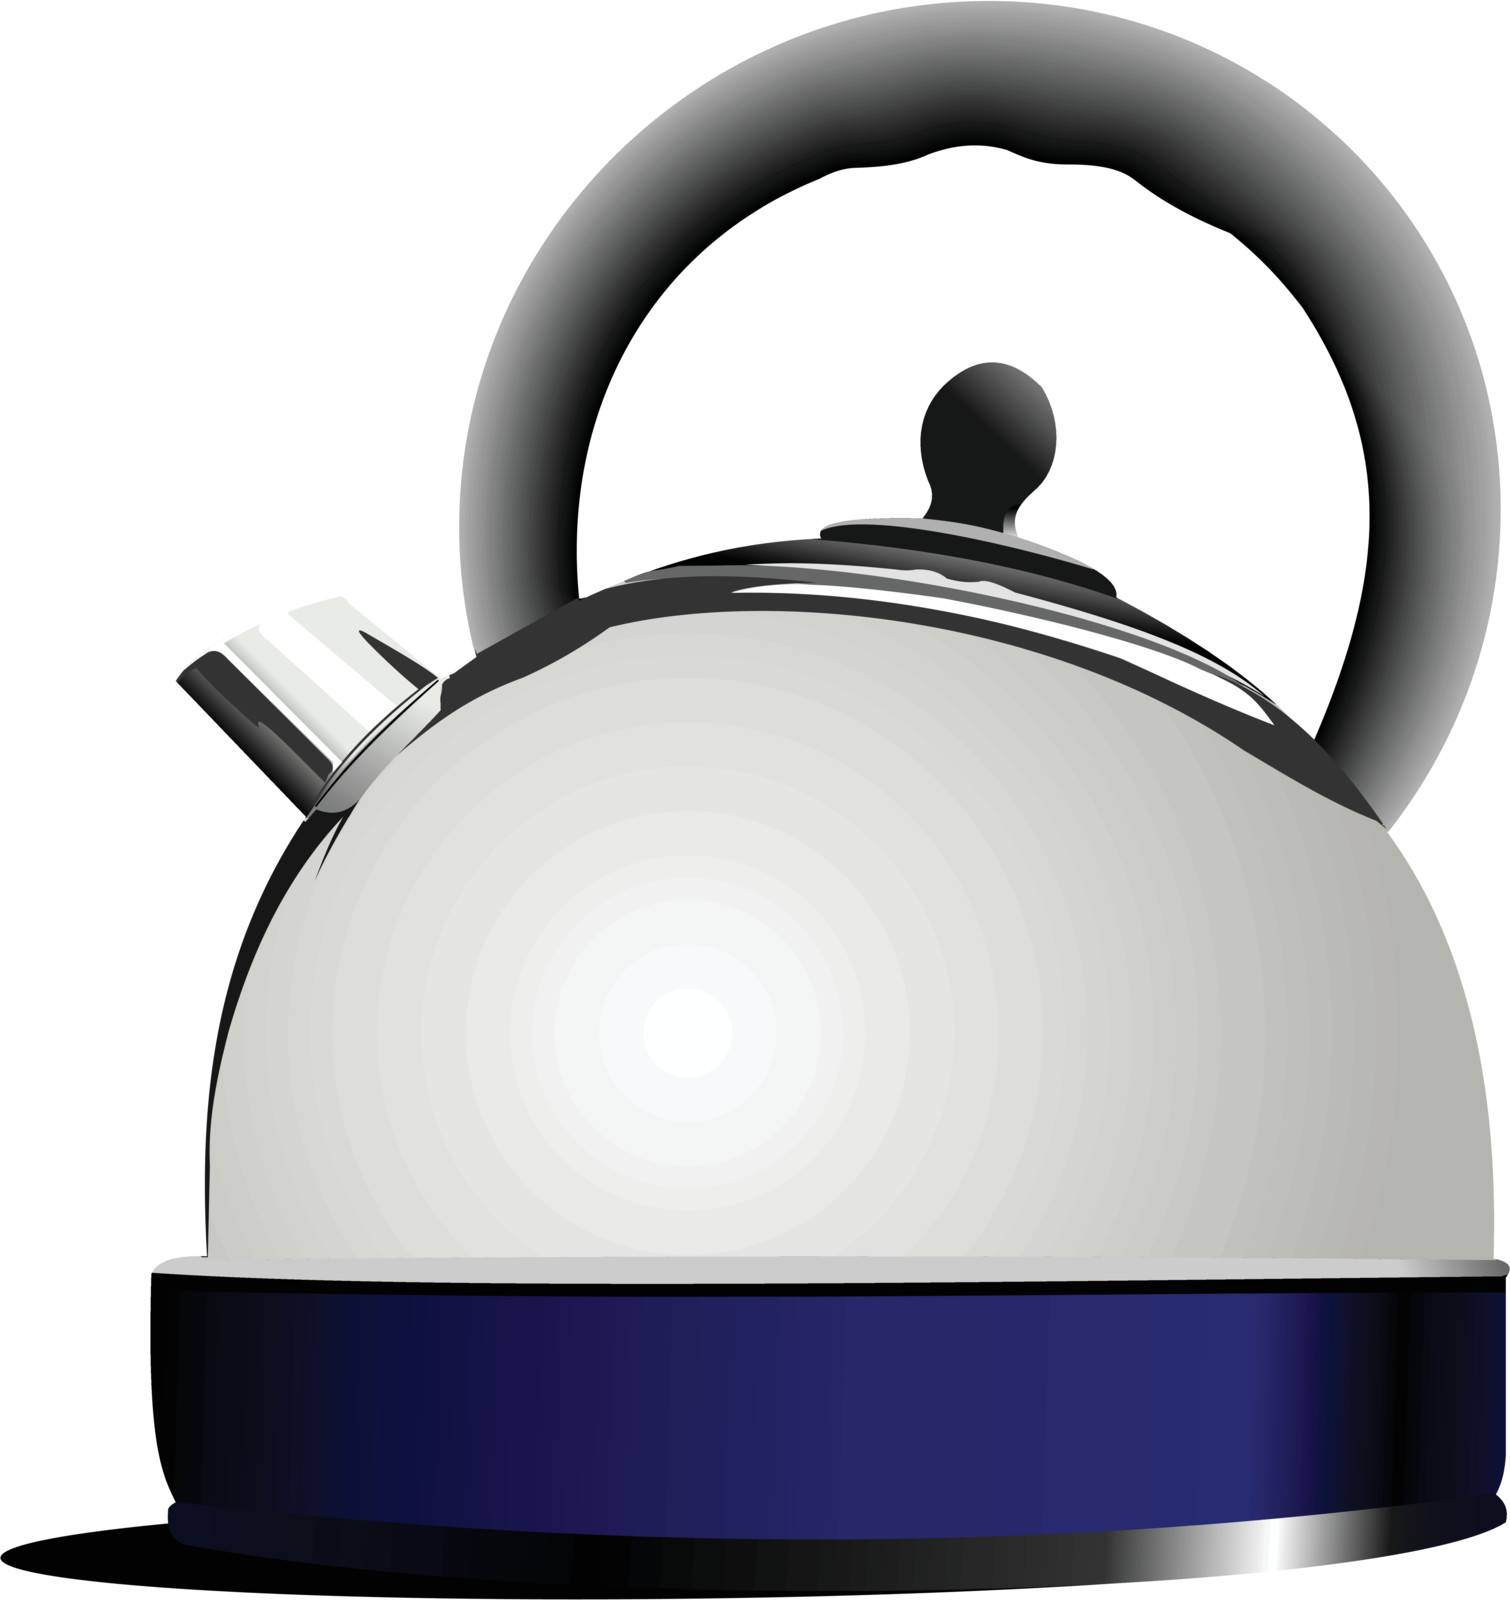 Shiny steel kettle. Vector illustration by leonido